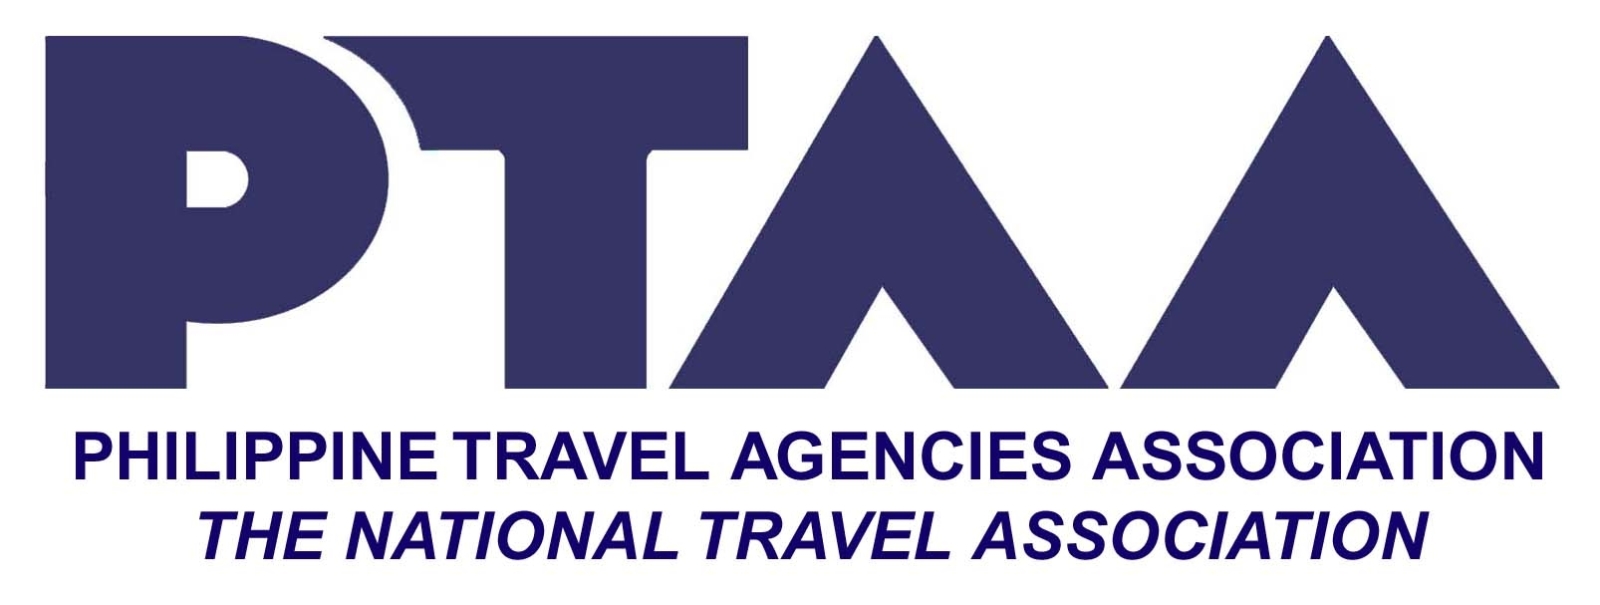 philippines travel agencies association